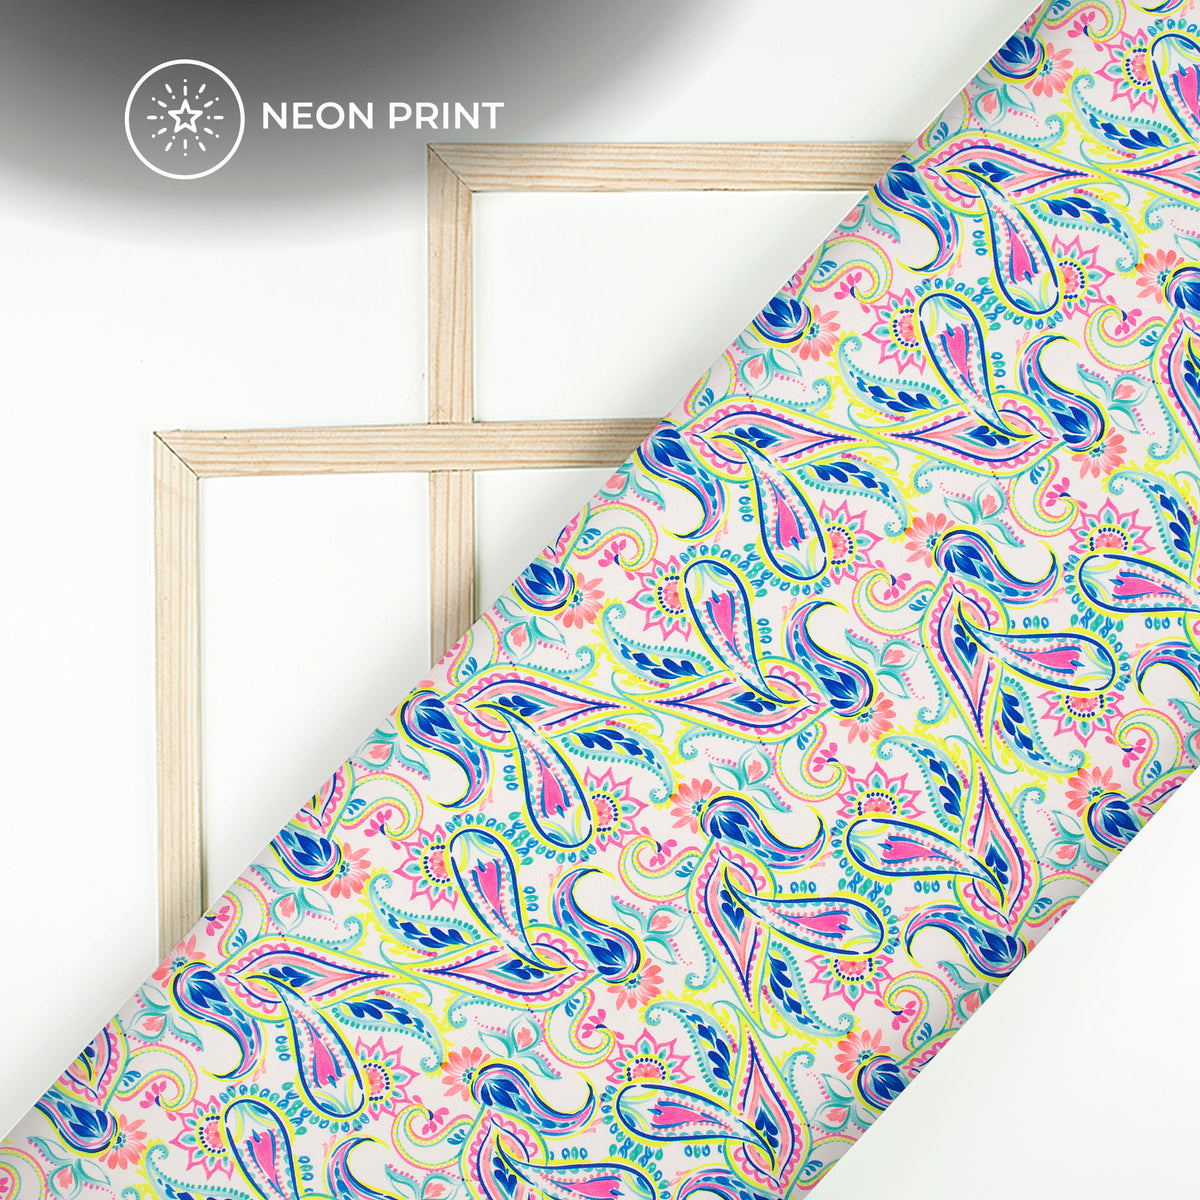 Electric Garden: Bespoke Paisley Digital Print Rayon Fabric